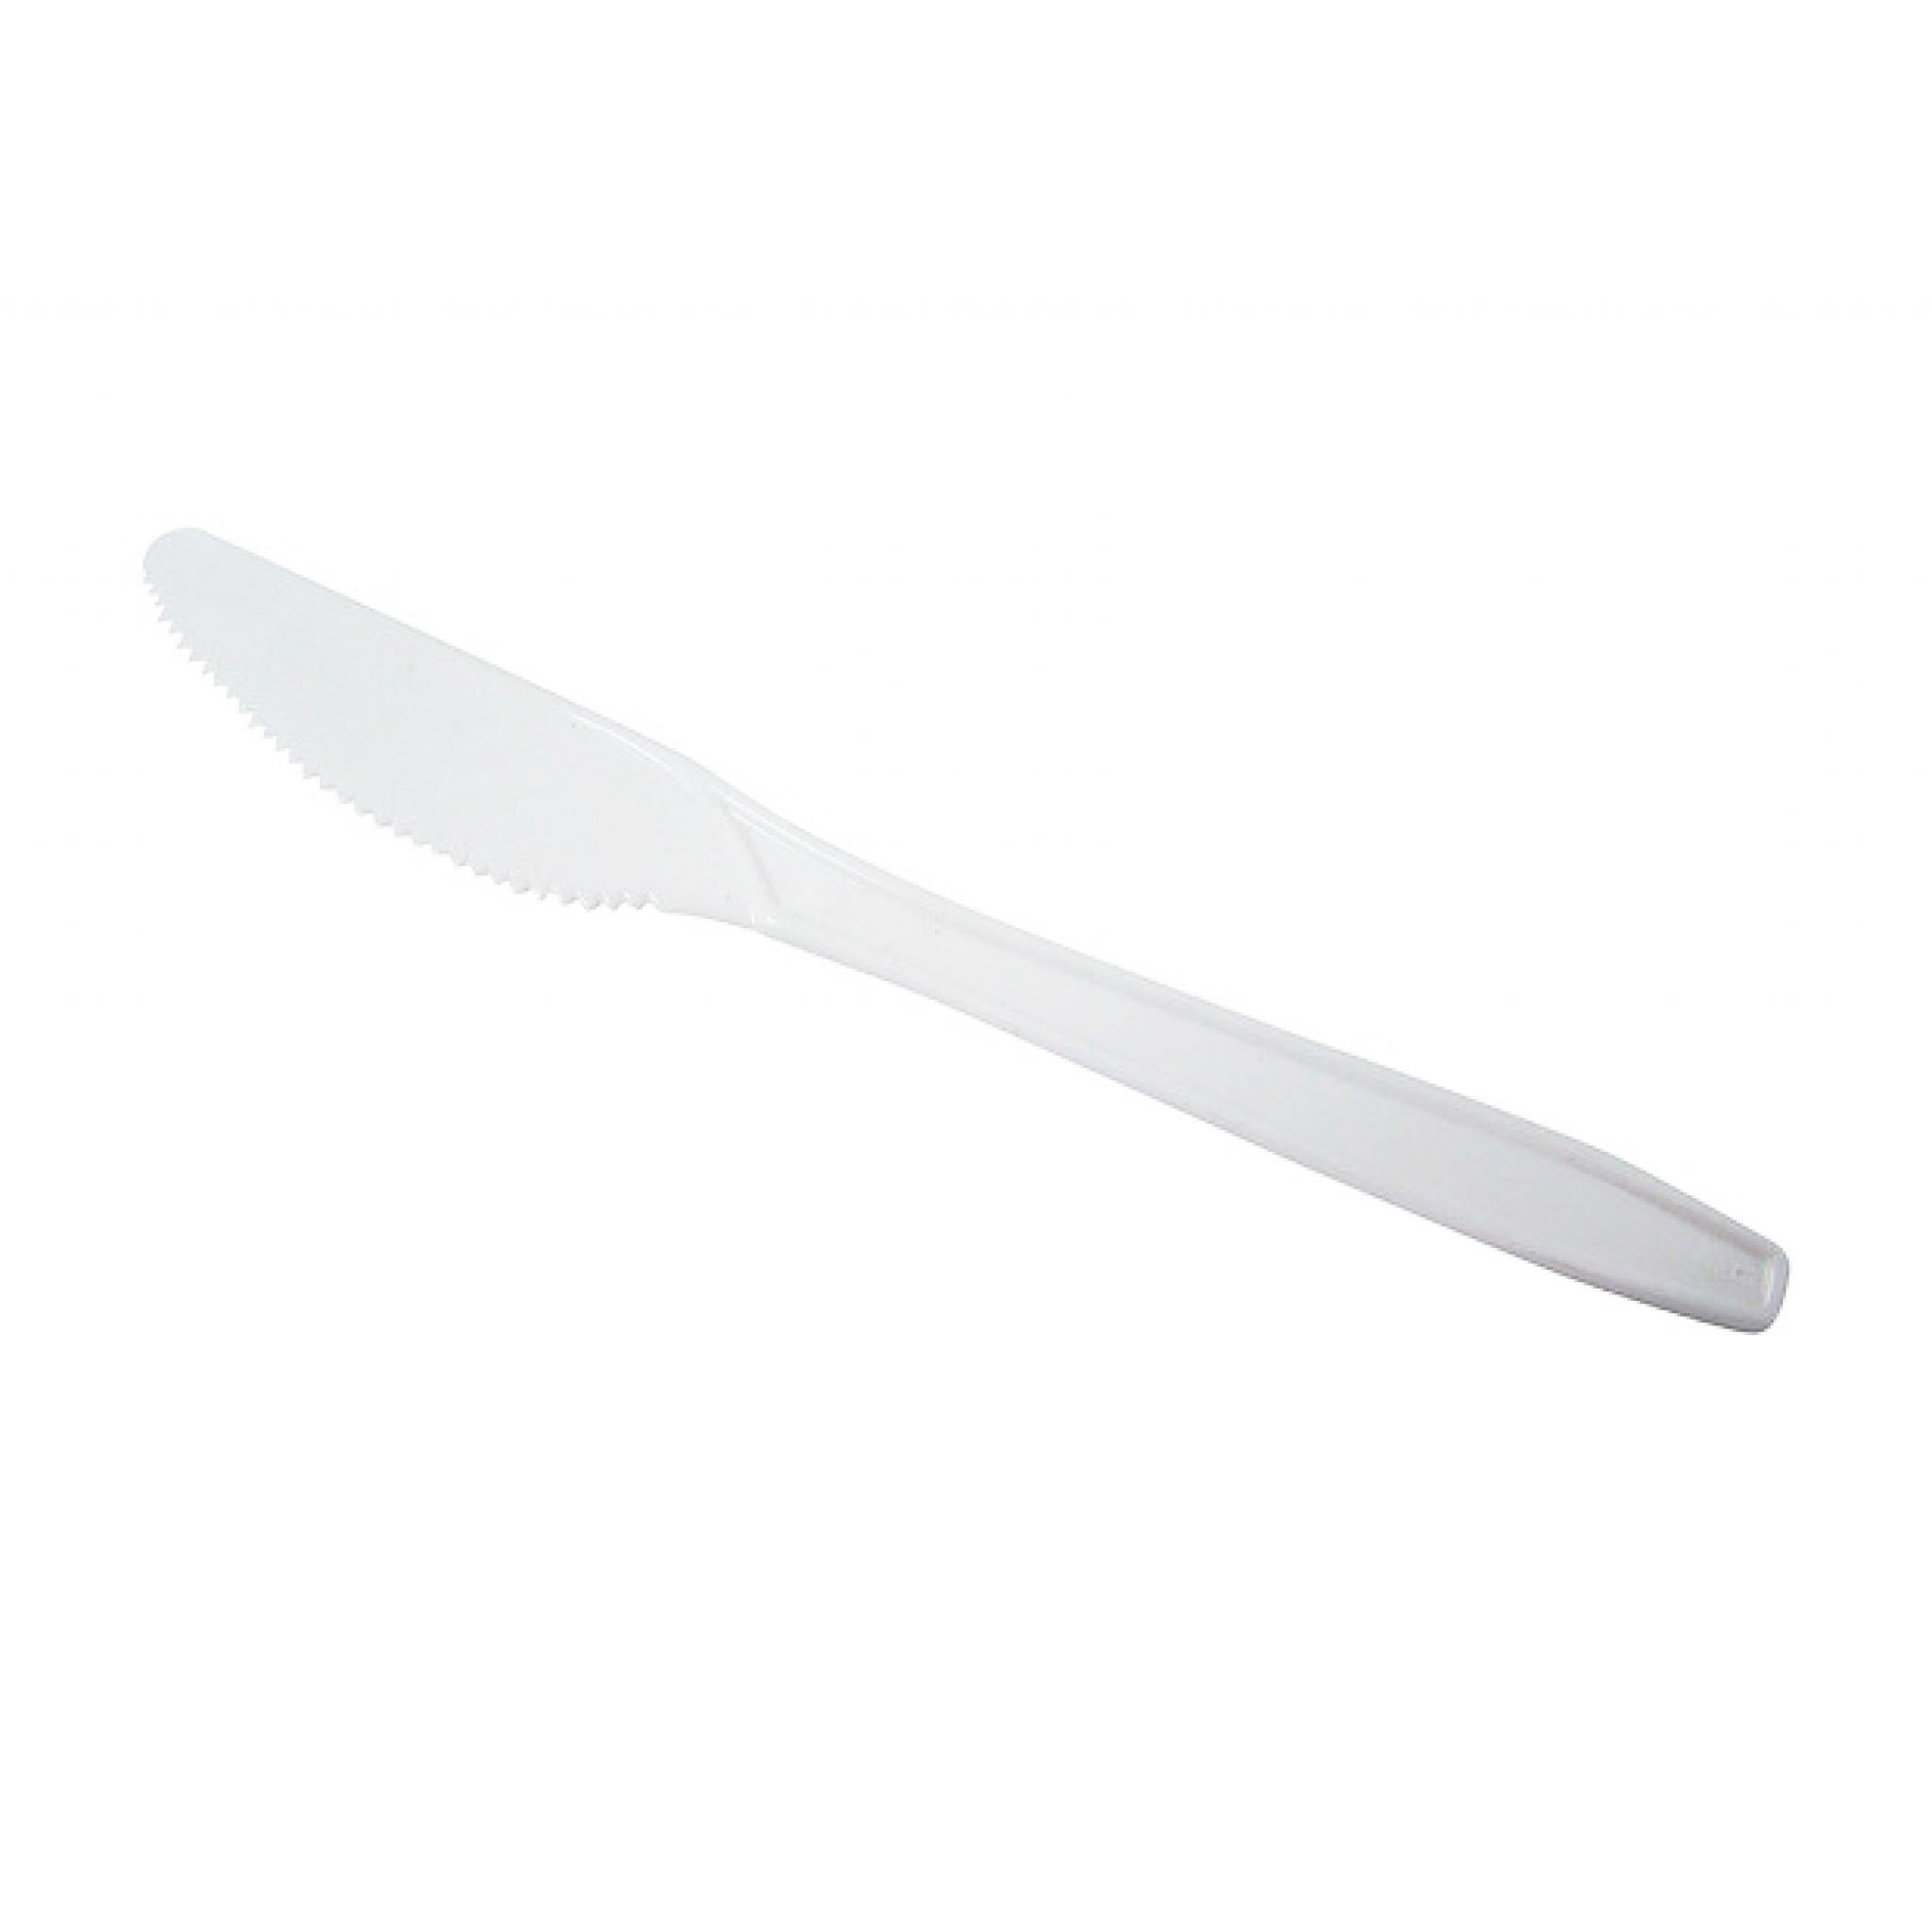 Knife HD Legion 1/1000 - P3, Paper Plastic Products Inc.